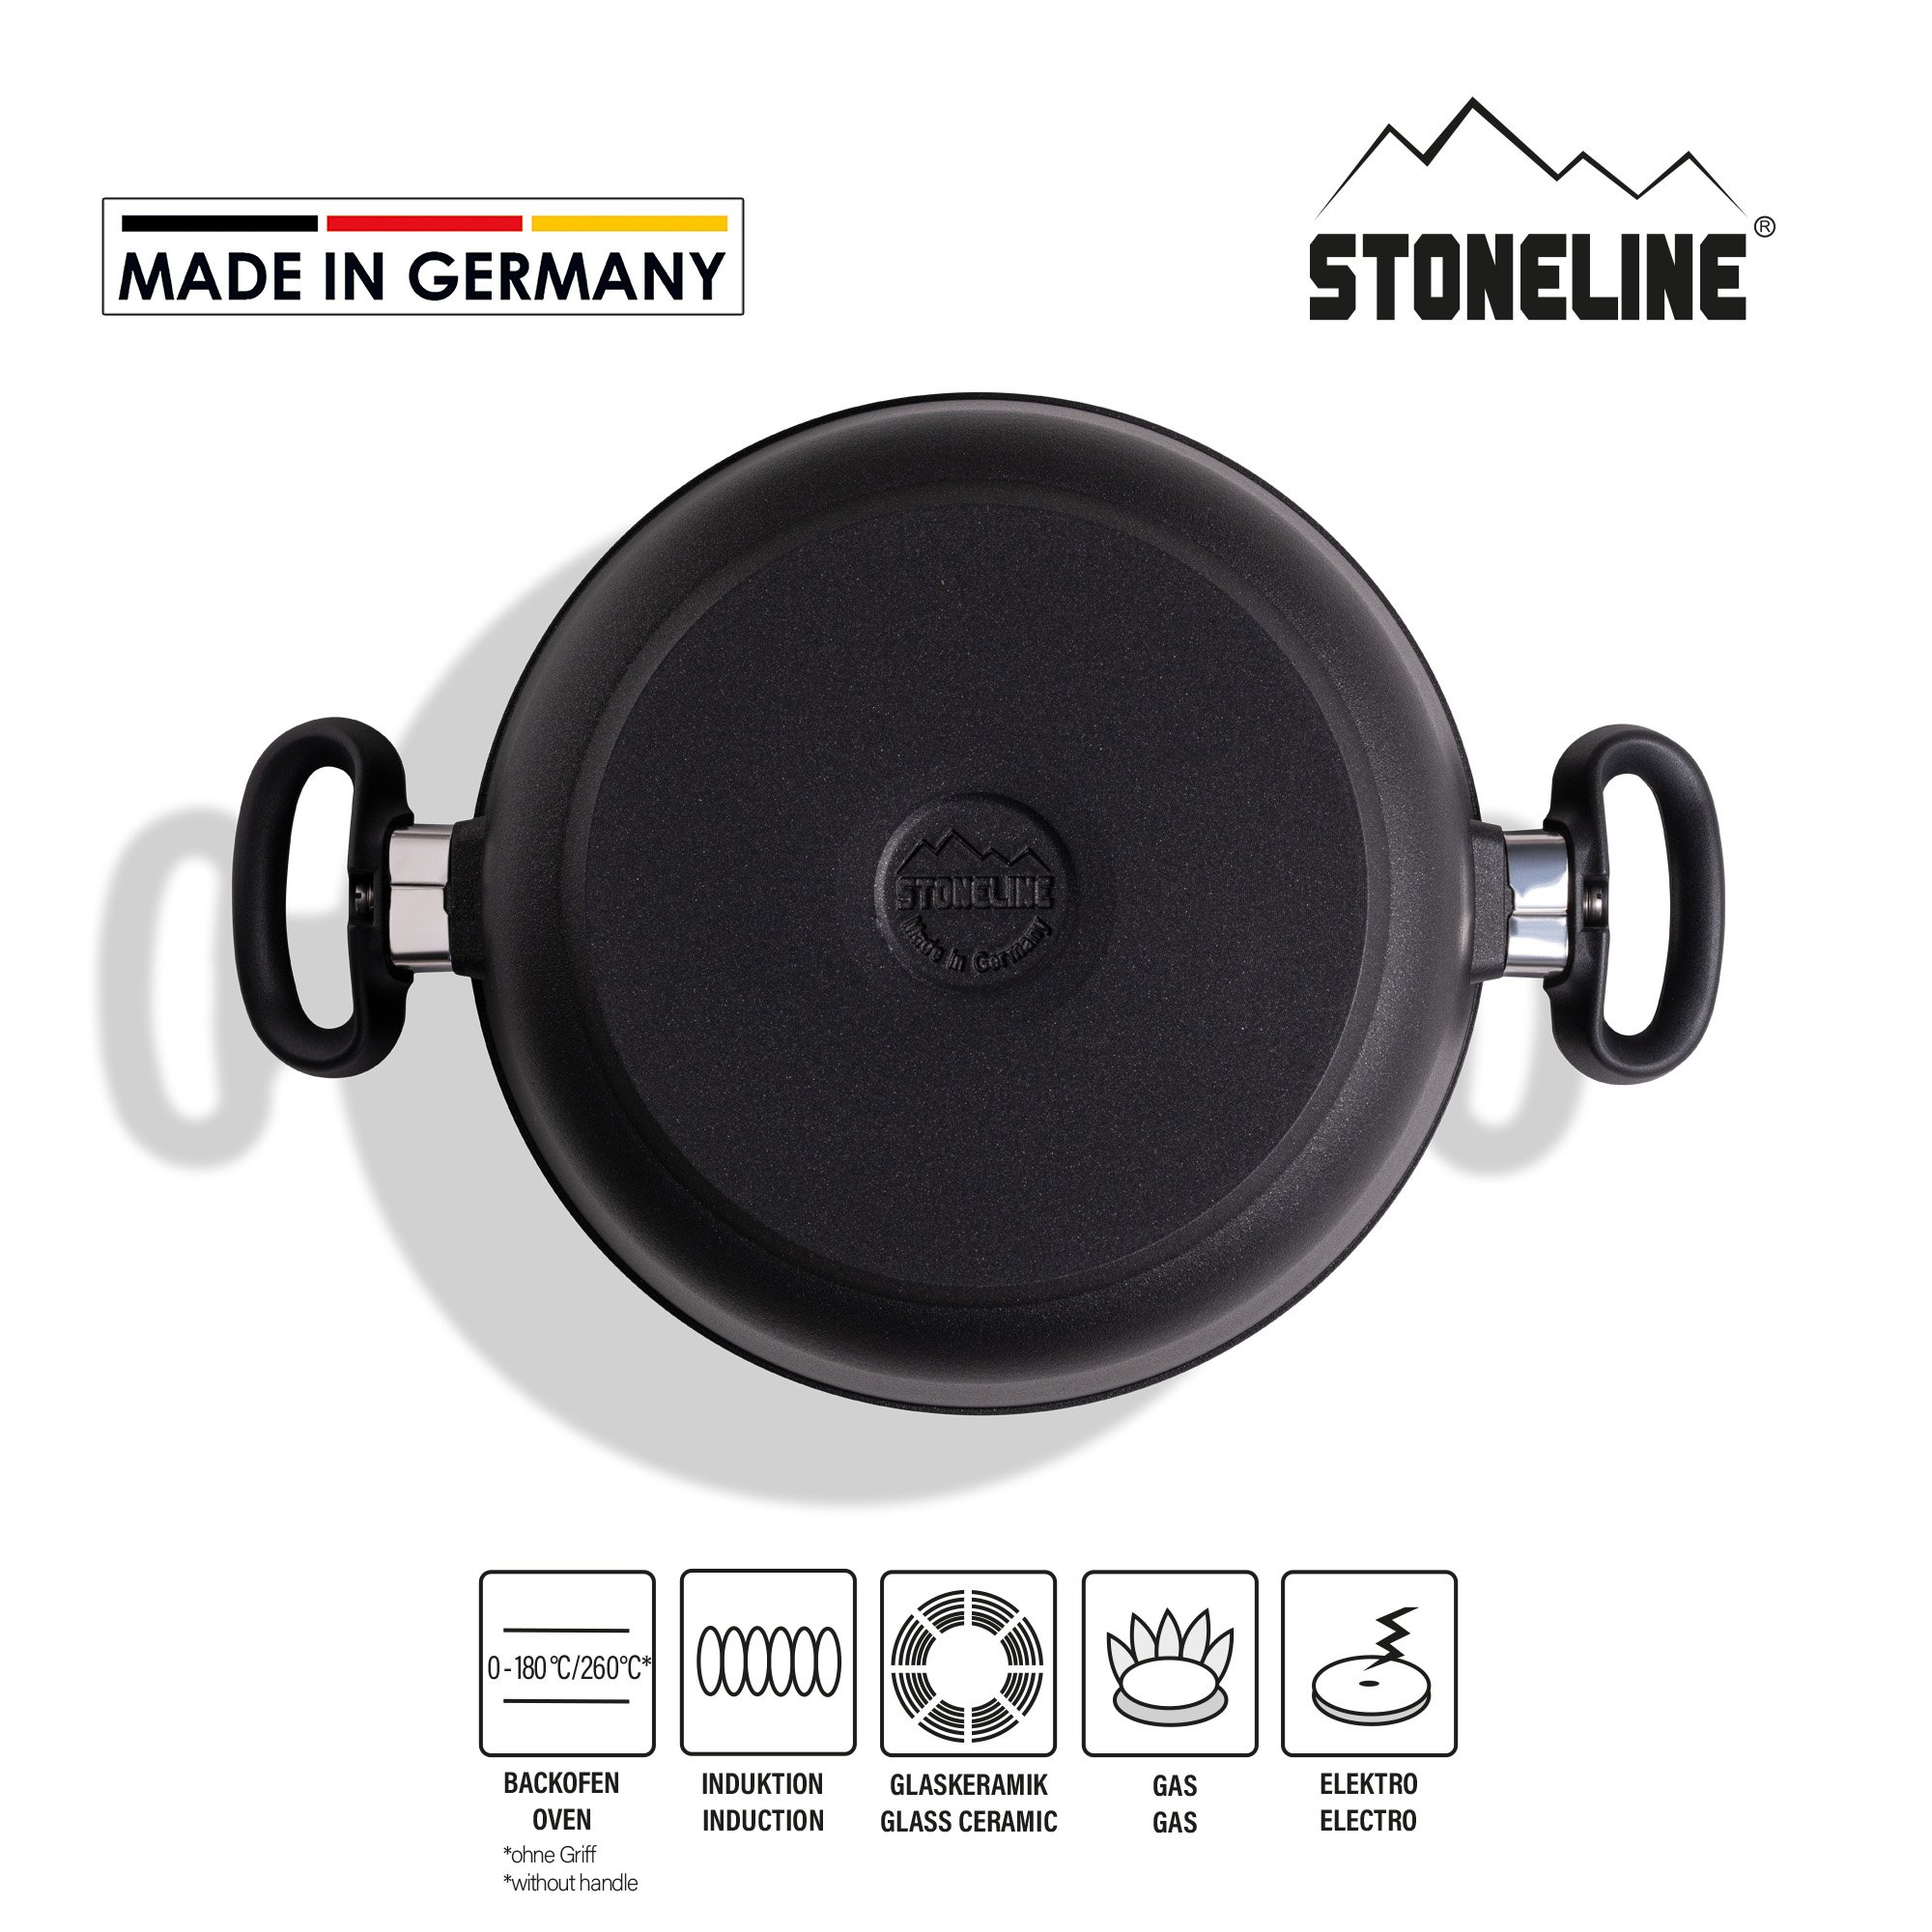 STONELINE® Pentola 24 cm MADE IN GERMANY